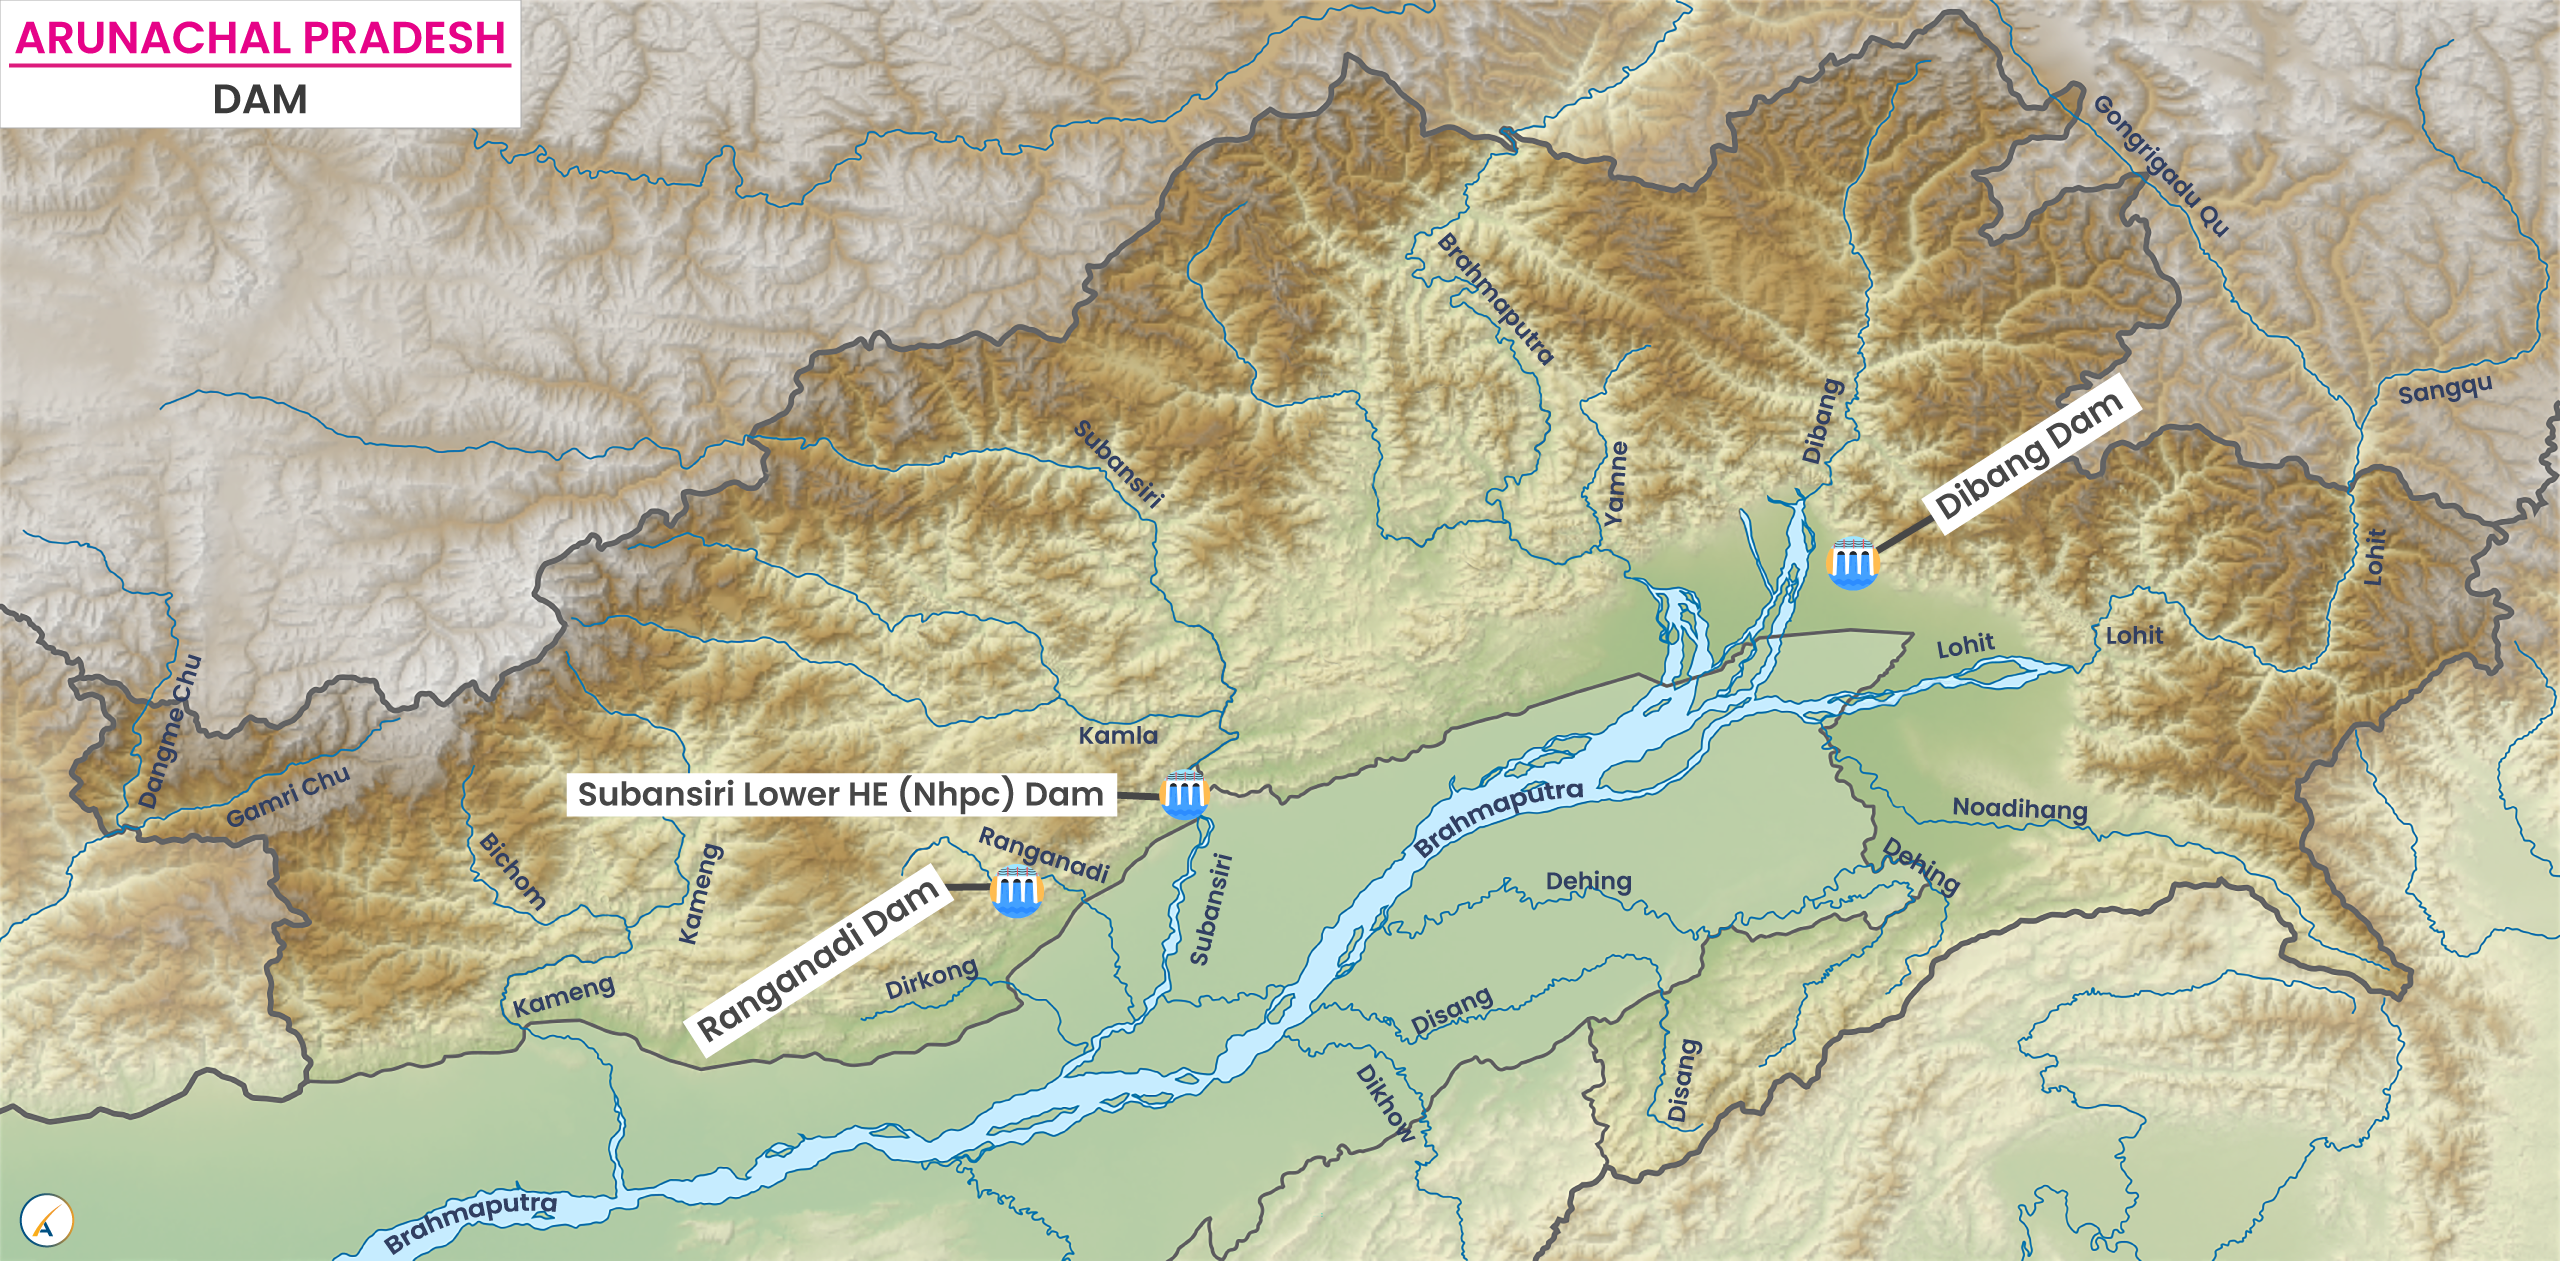 Major Dams in Arunachal Pradesh